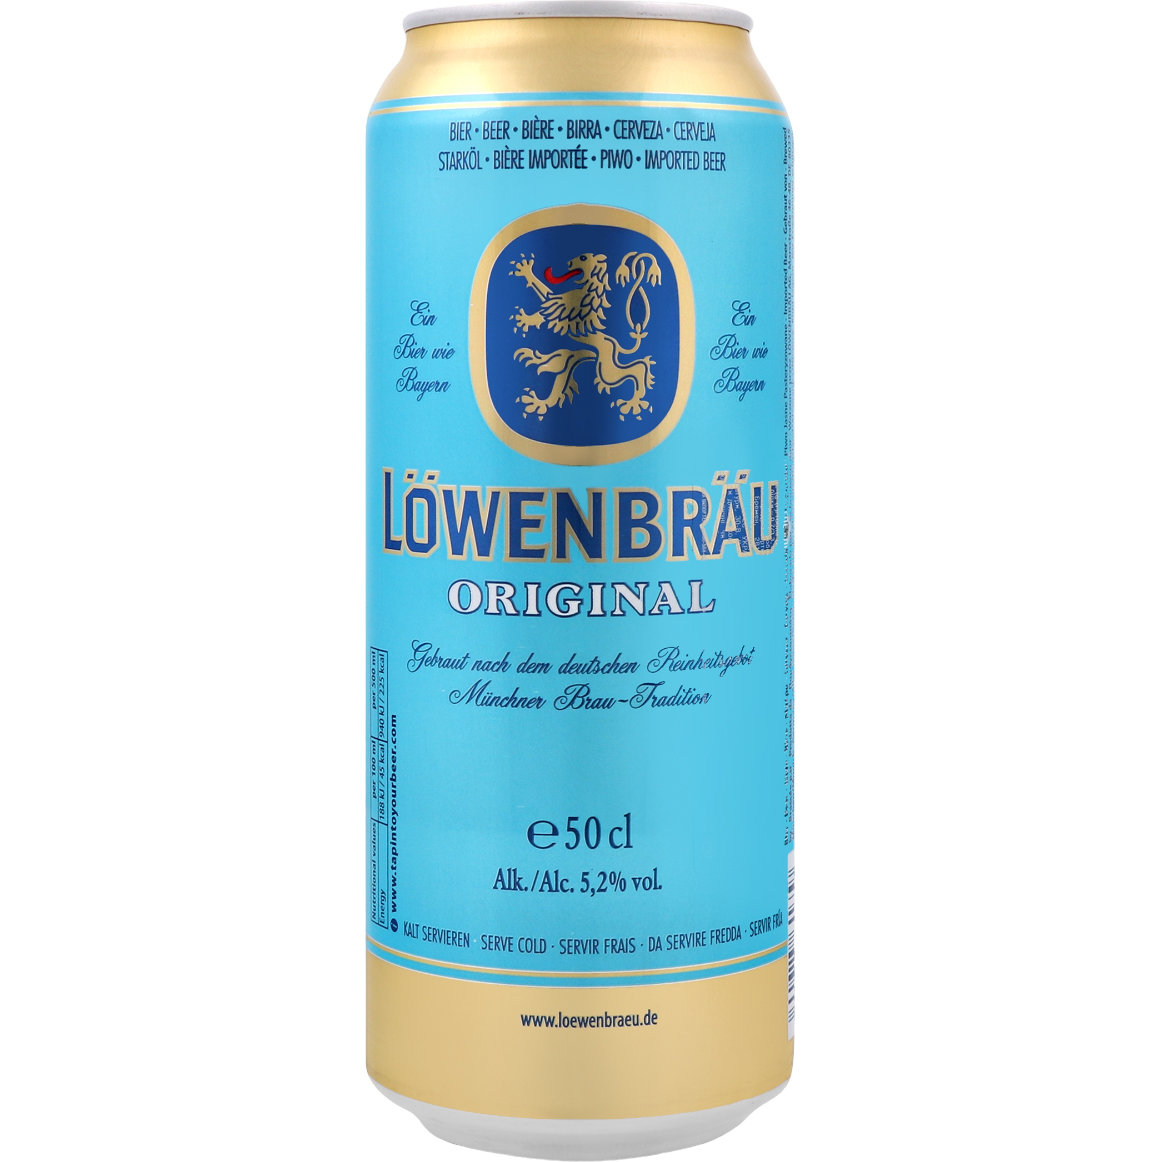 Пиво Lowenbrau Original, светлое, 5,2%, ж/б, 0,5 л (639837) - фото 1